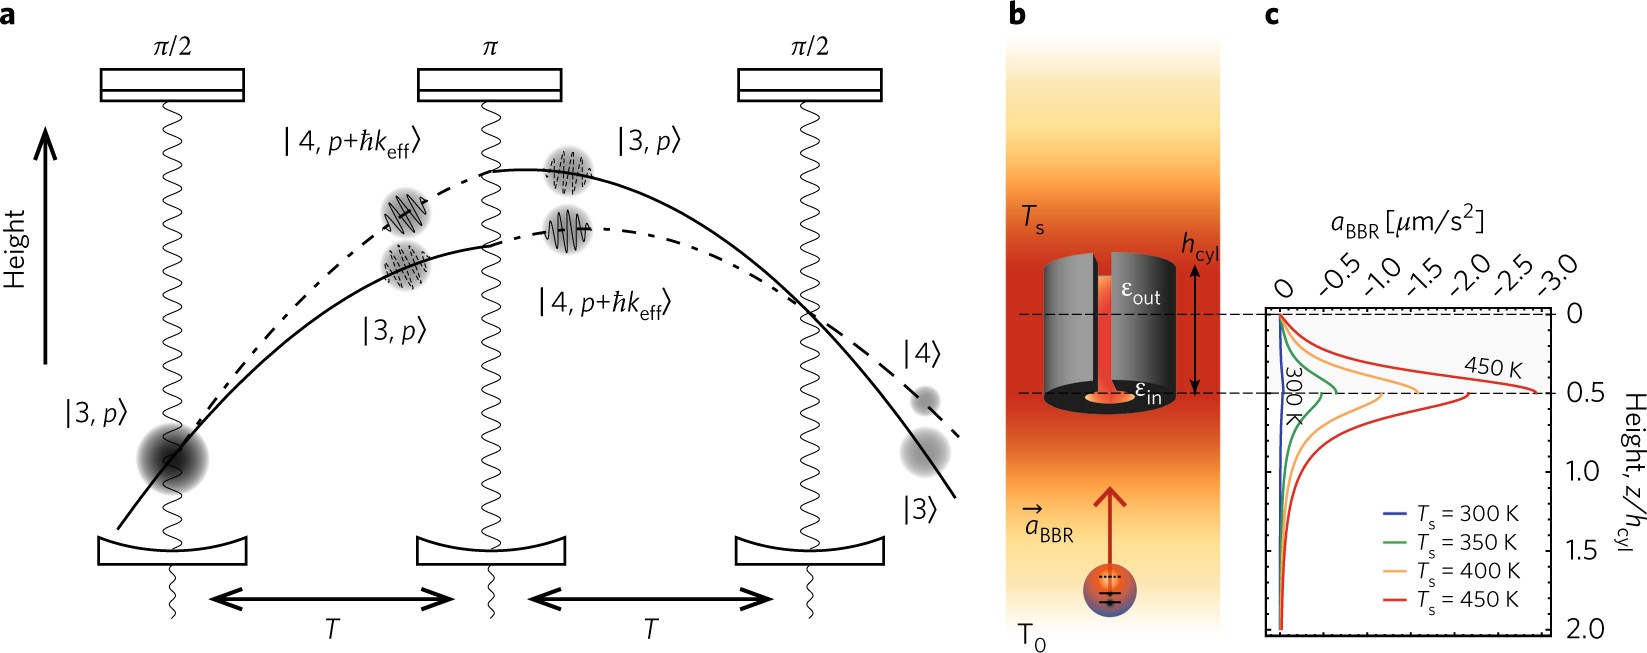 kombination Norm Ny mening Attractive force on atoms due to blackbody radiation | Nature Physics